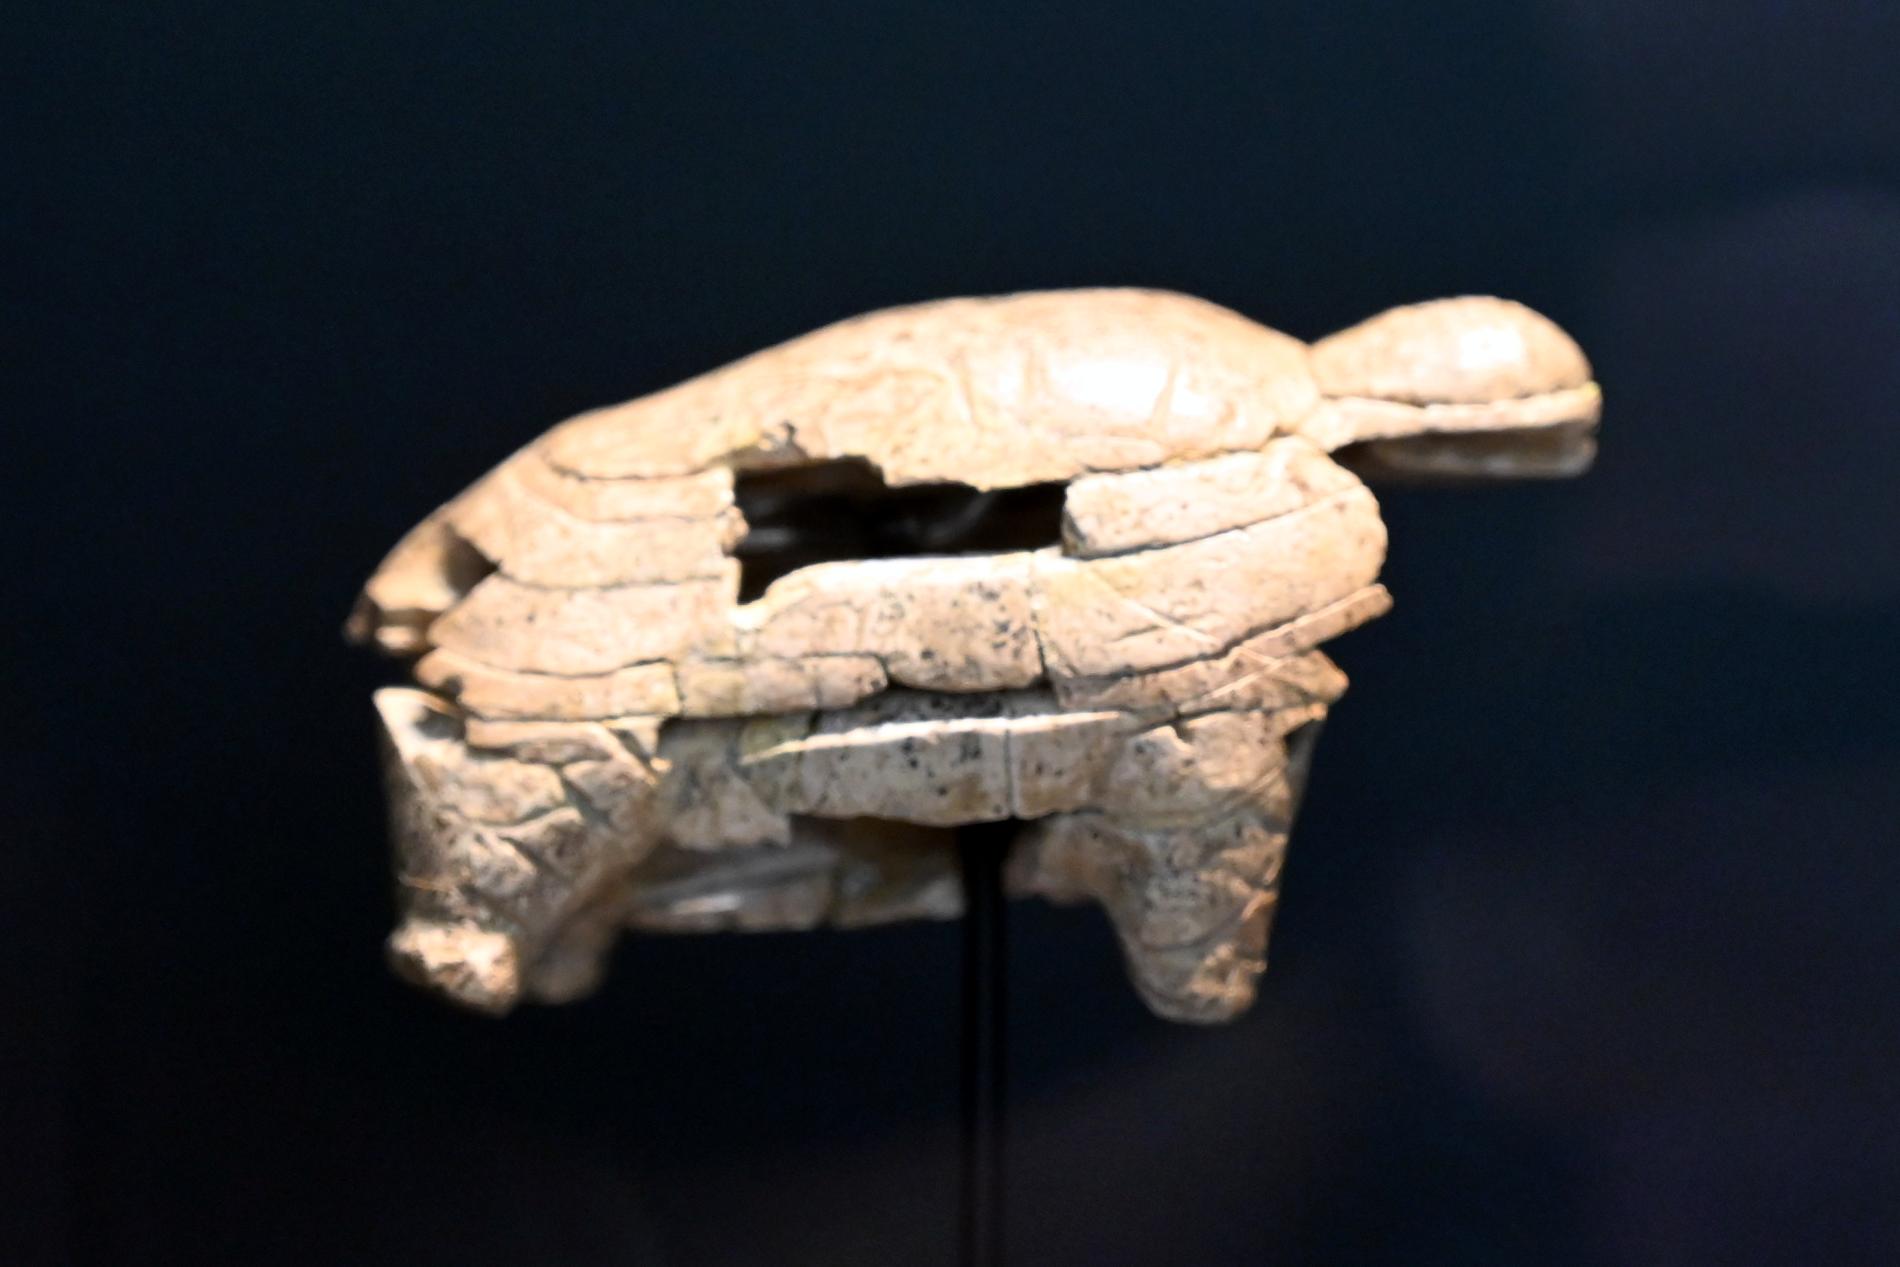 Mammut, 38000 - 33000 v. Chr., Bild 1/3